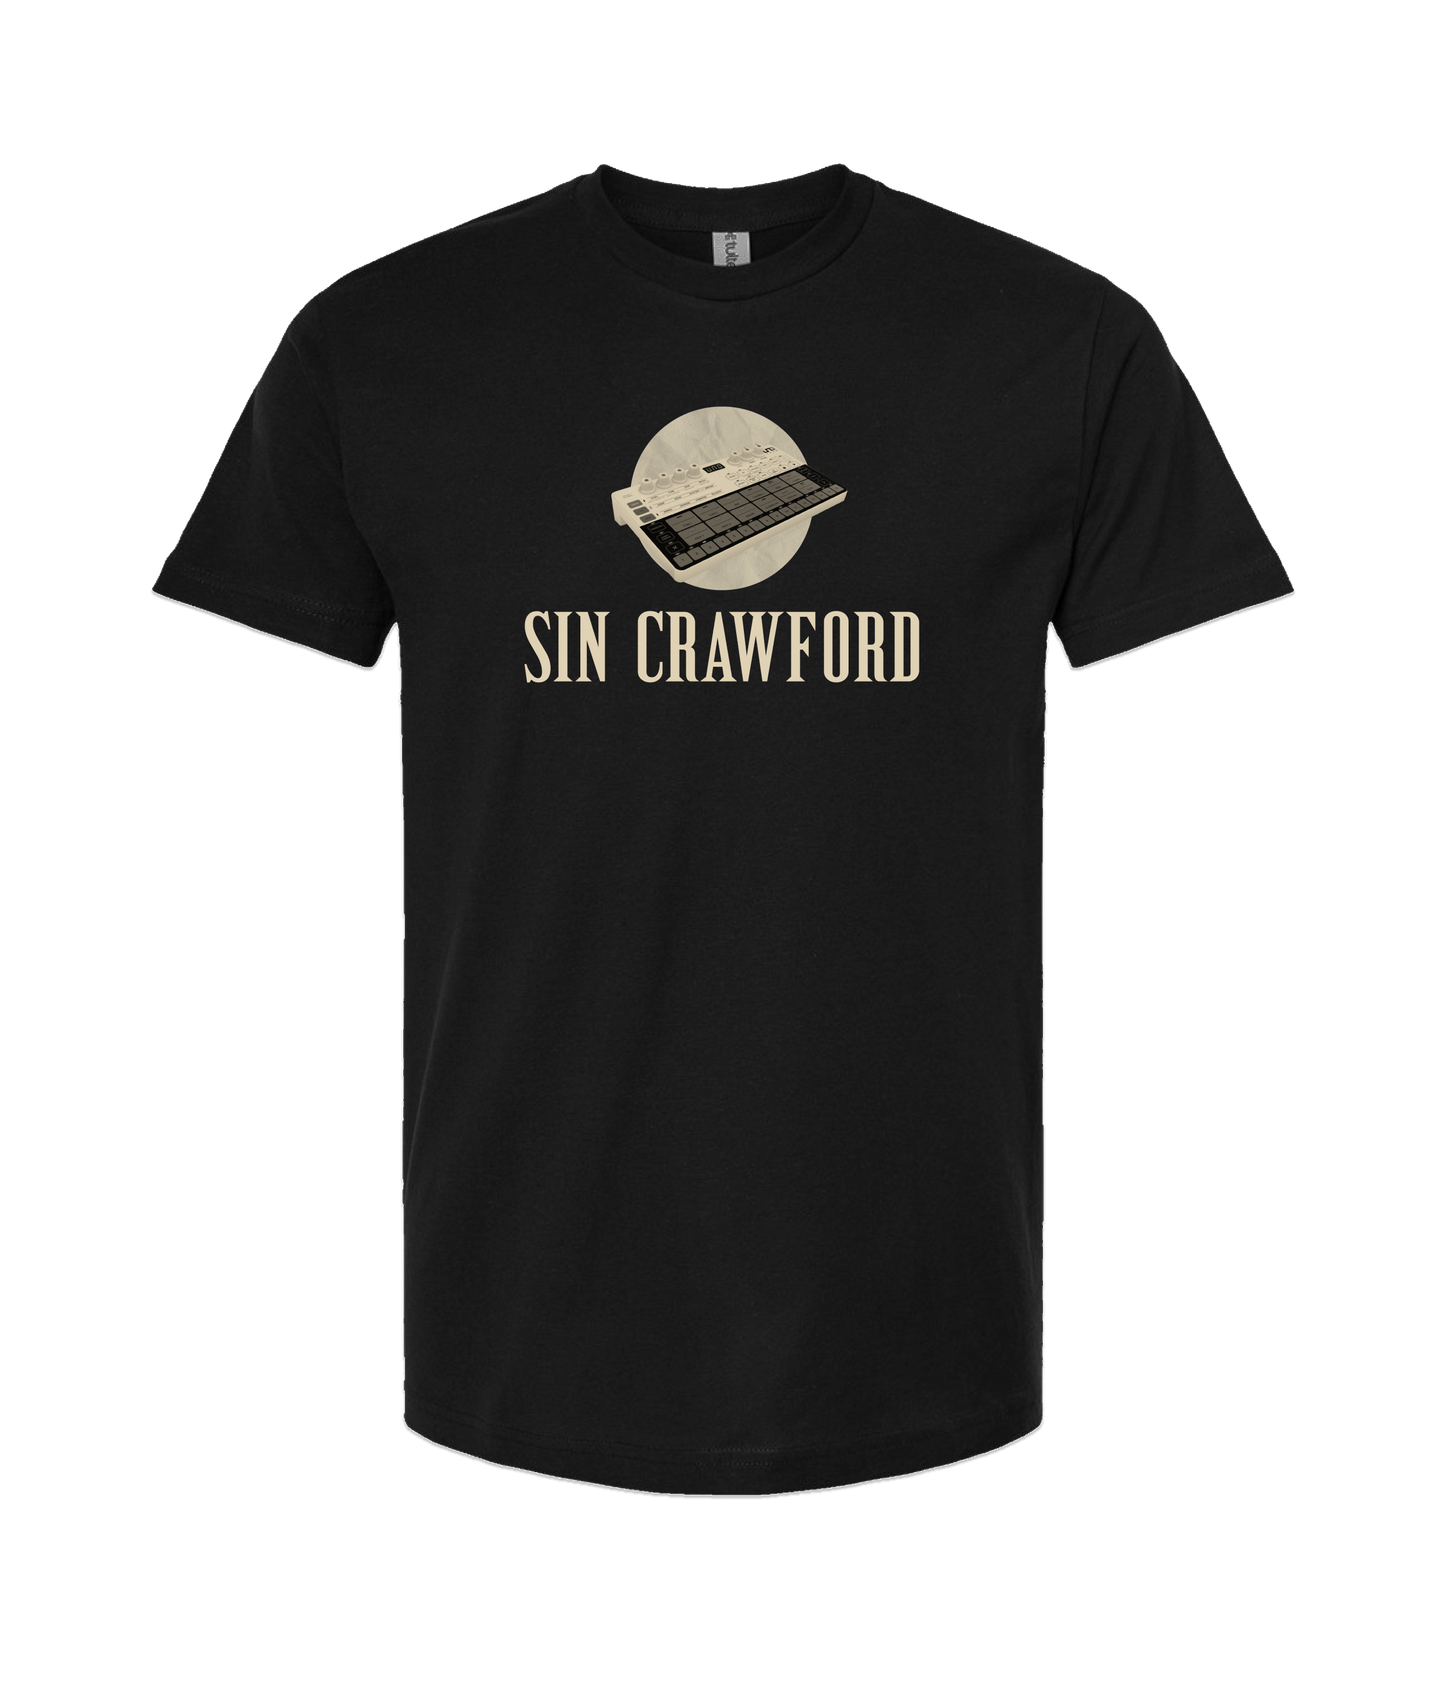 Sincrawford - Drum Machine - Black T-Shirt